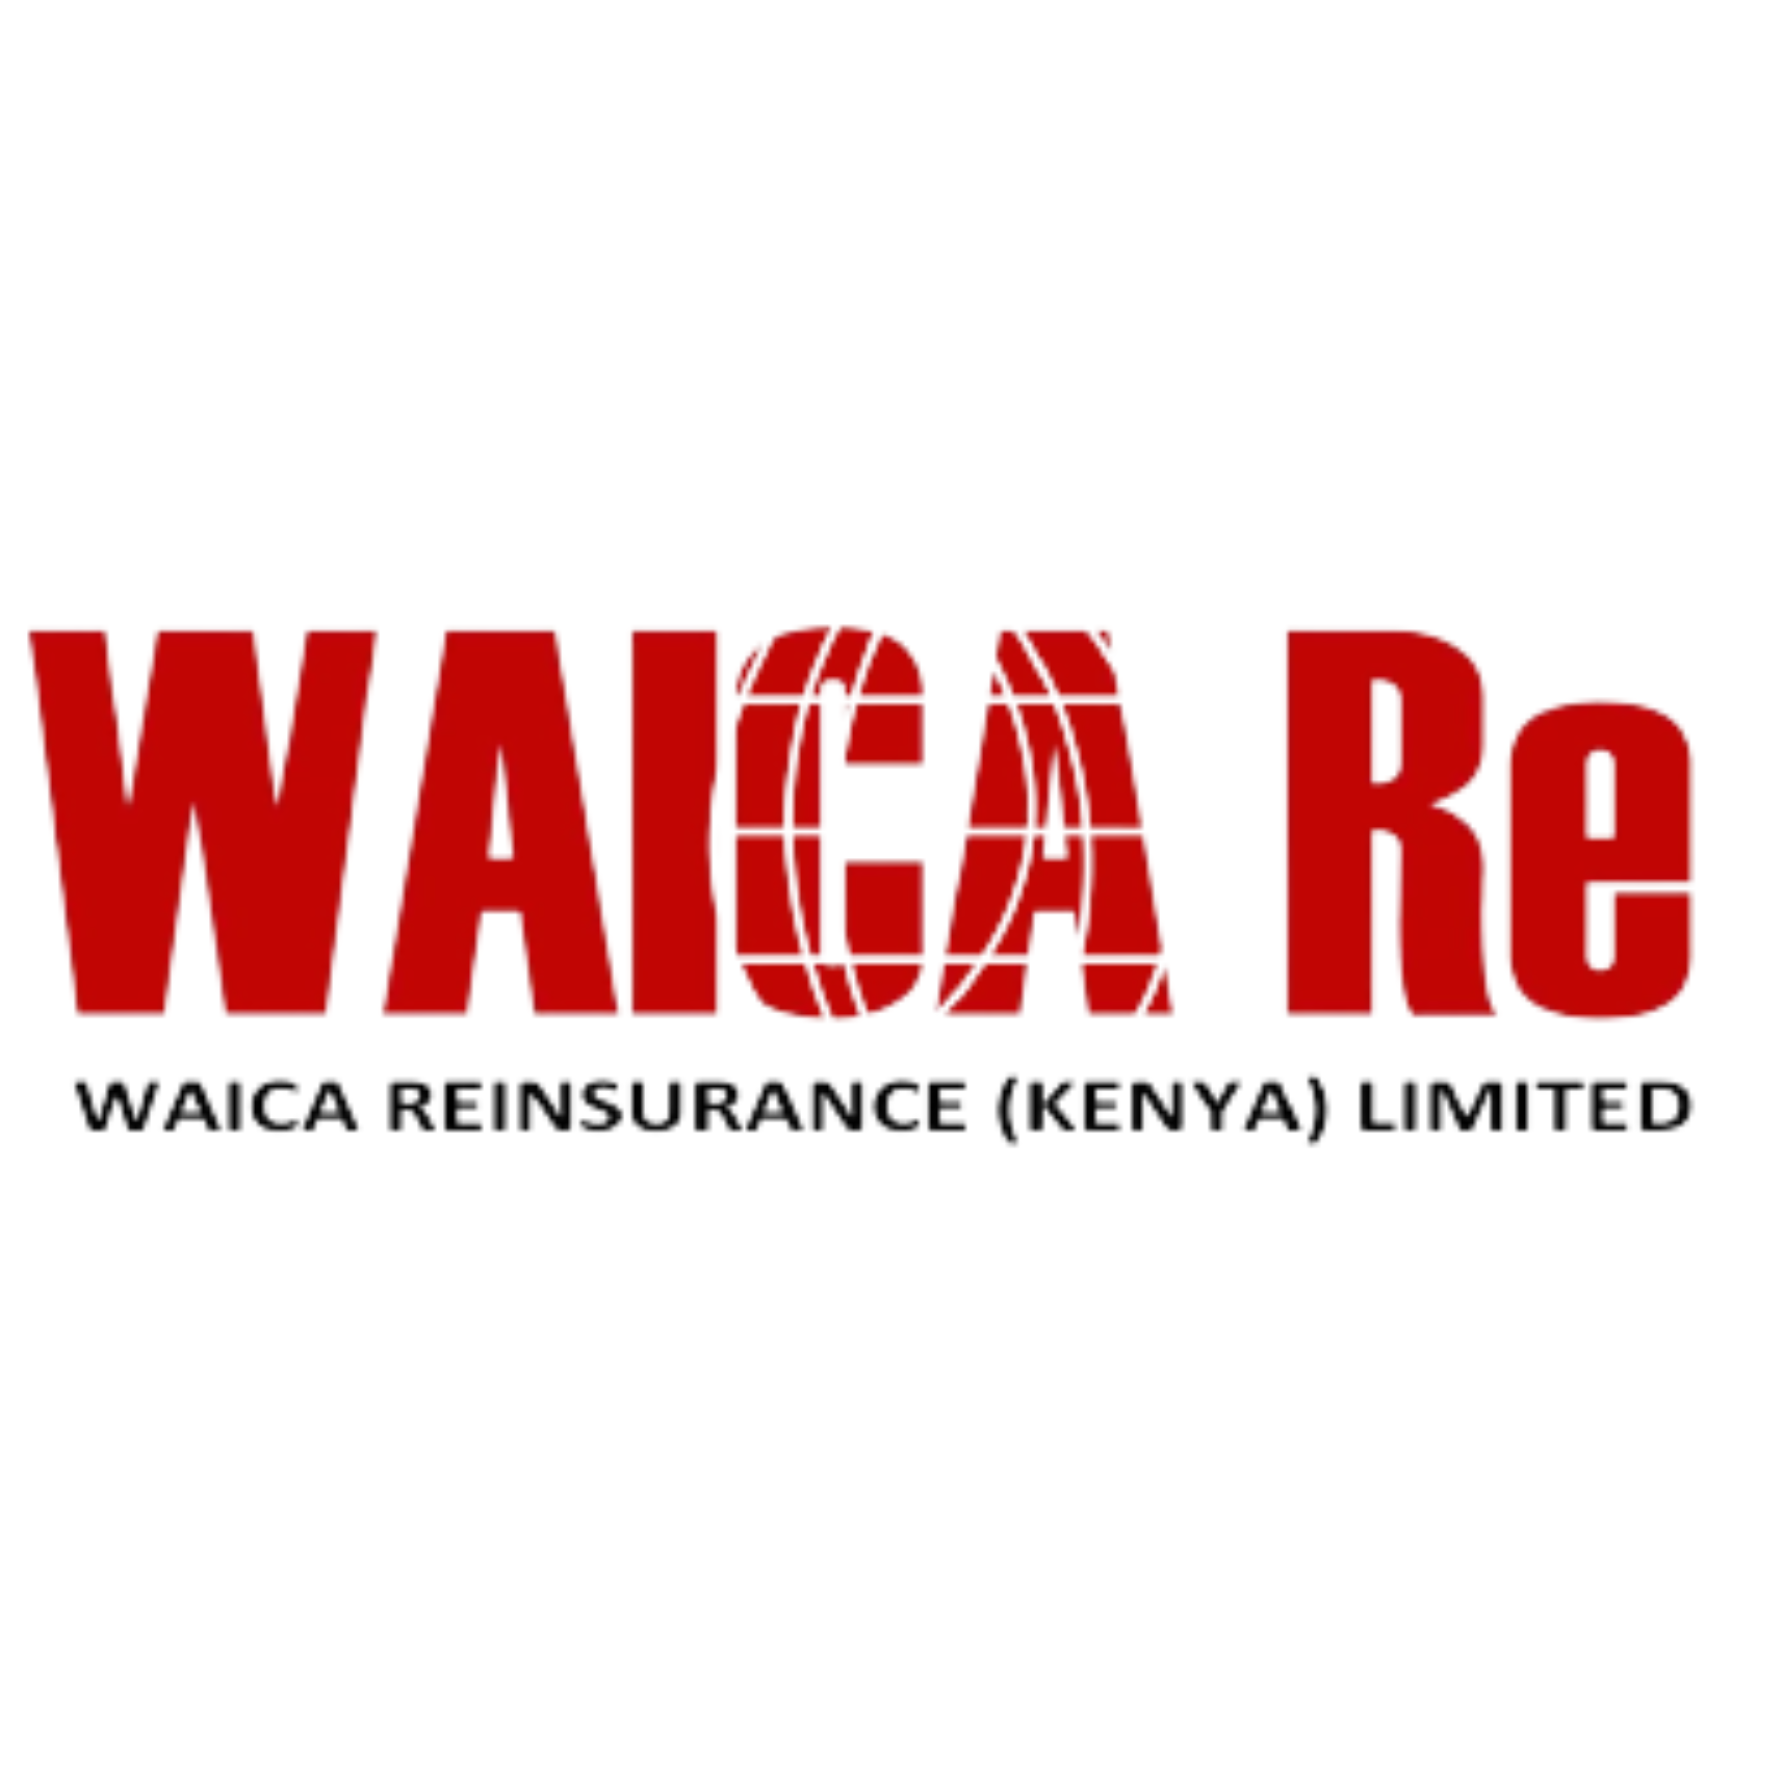 Waica Re Bronze  Sponsor